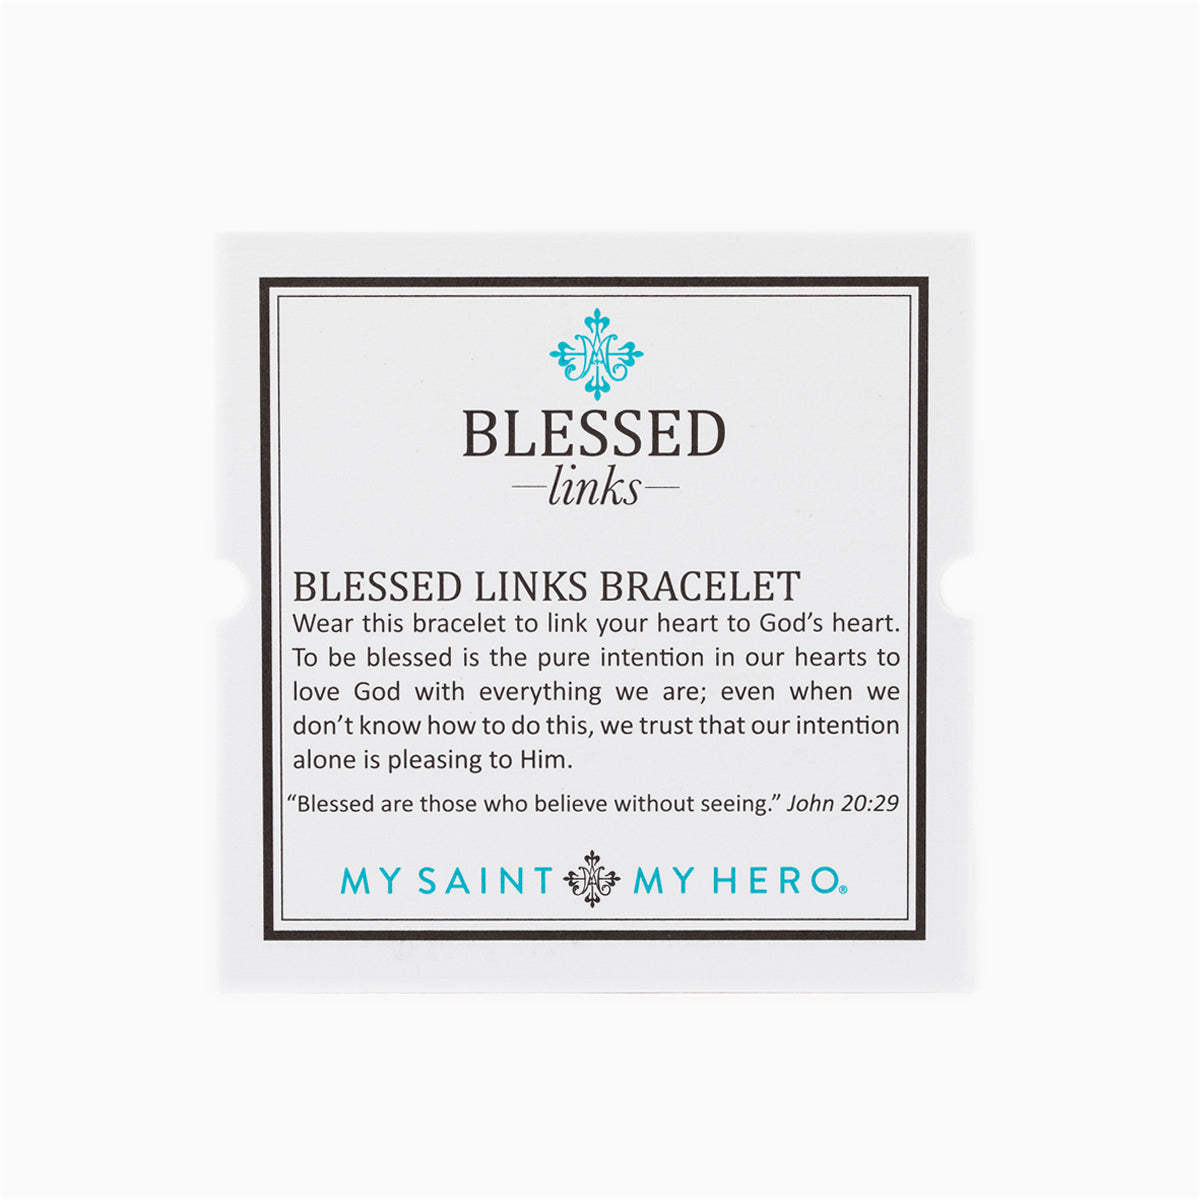 Blessed Links Bracelet by My Saint My Hero